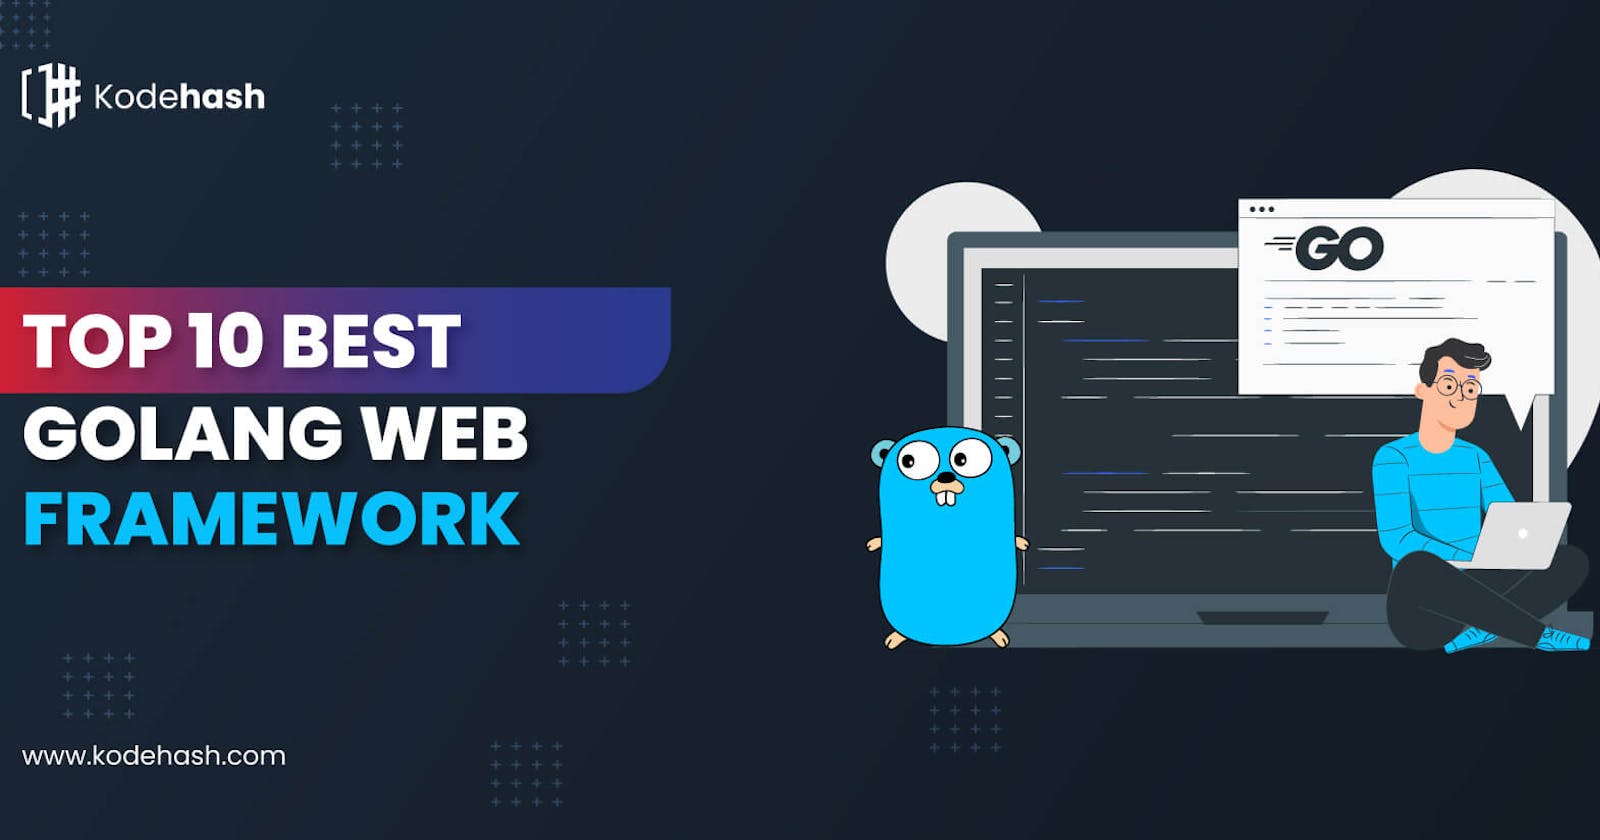 Exploring the Top 10 Golang Web Frameworks